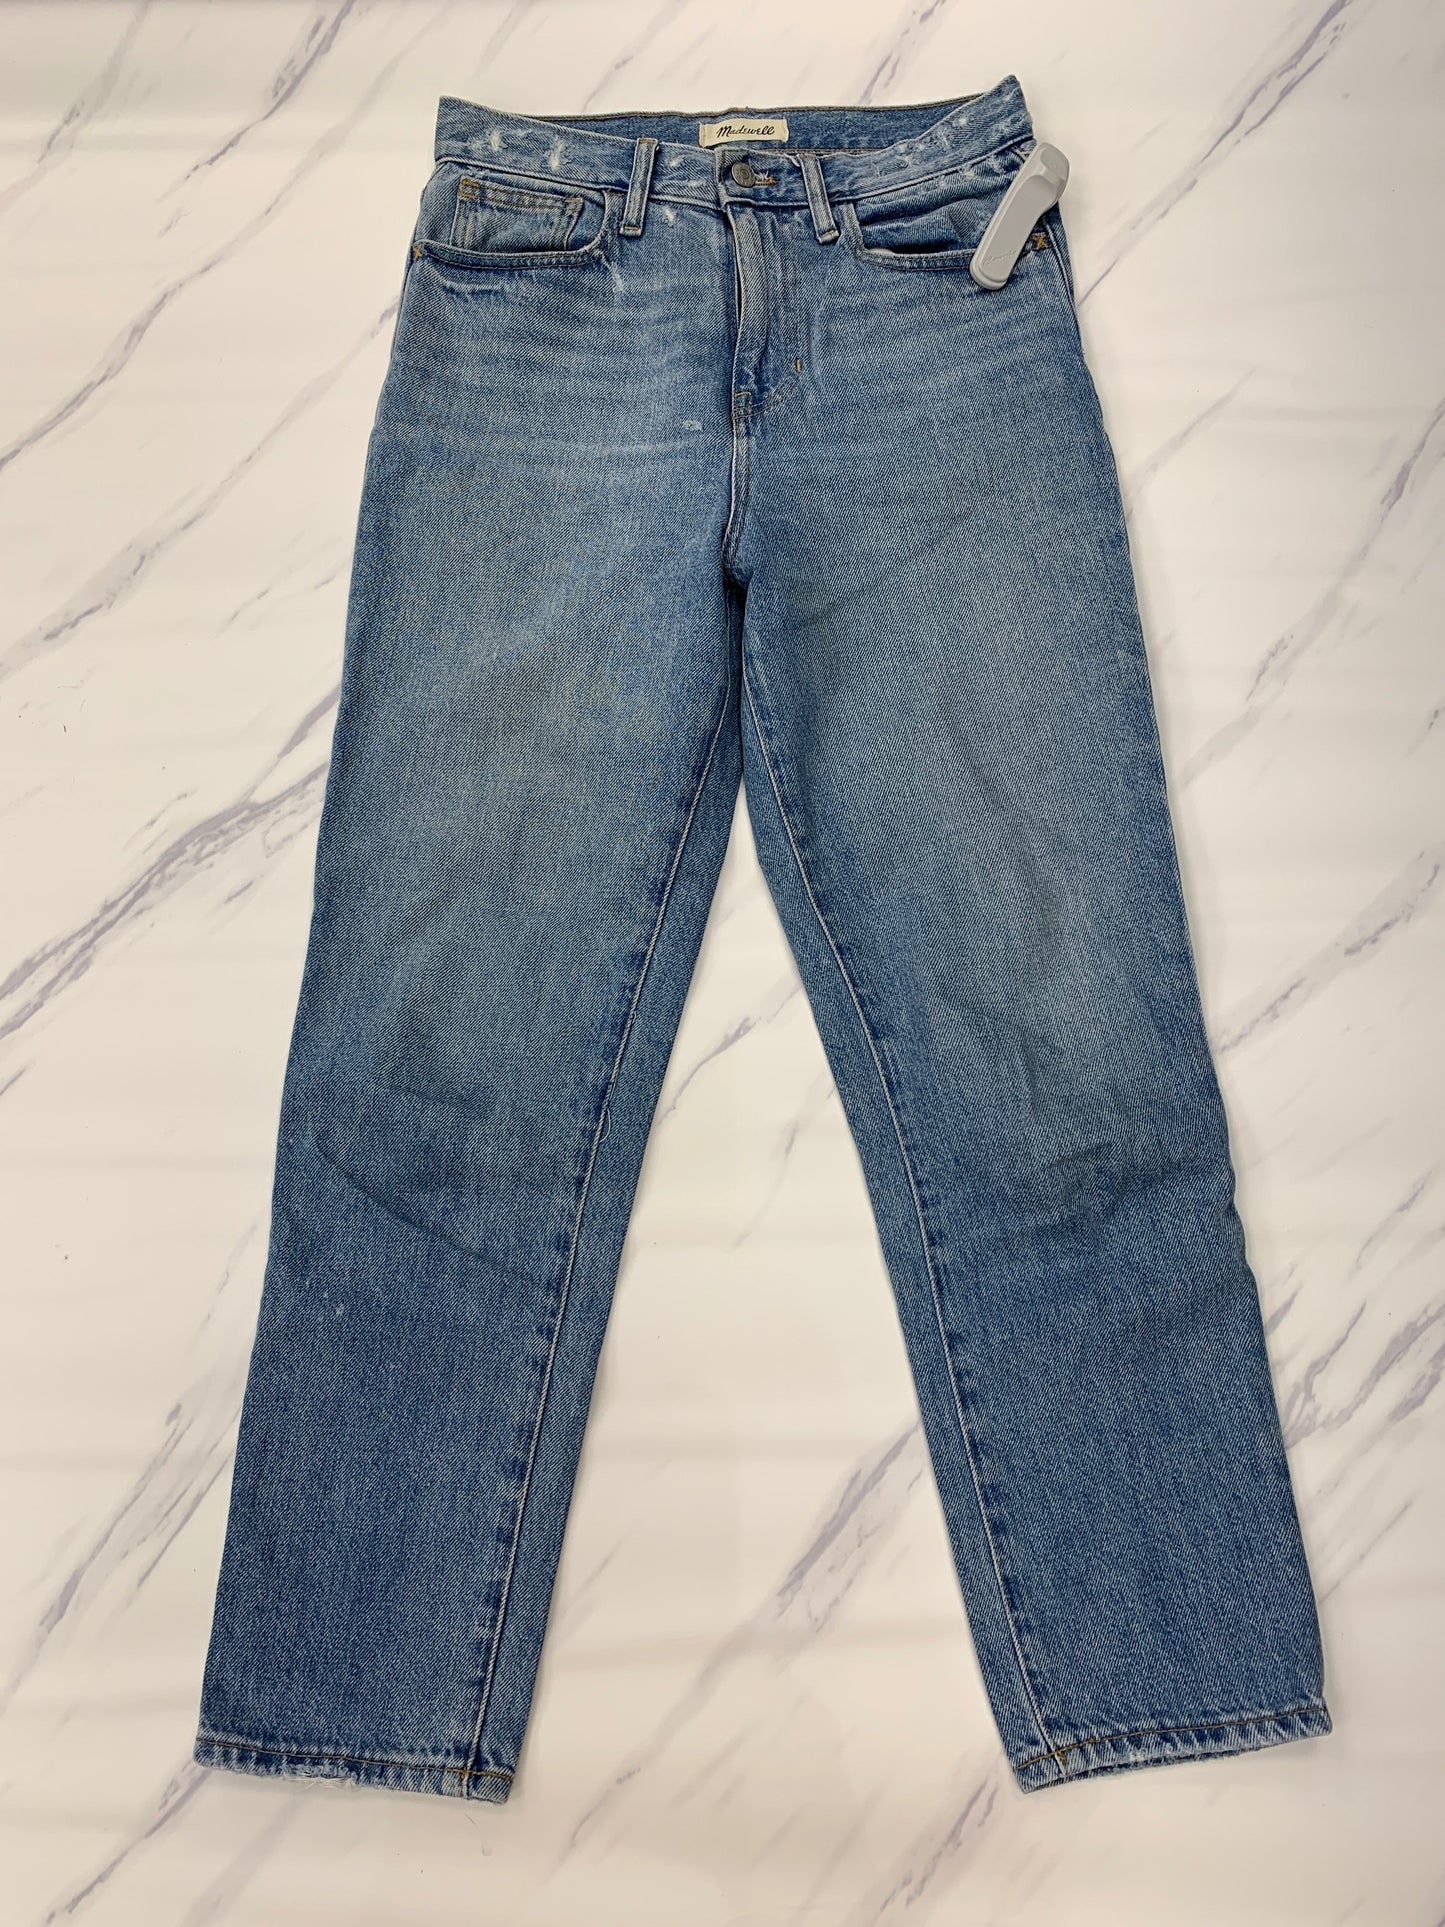 Jeans Designer Madewell, Size 2